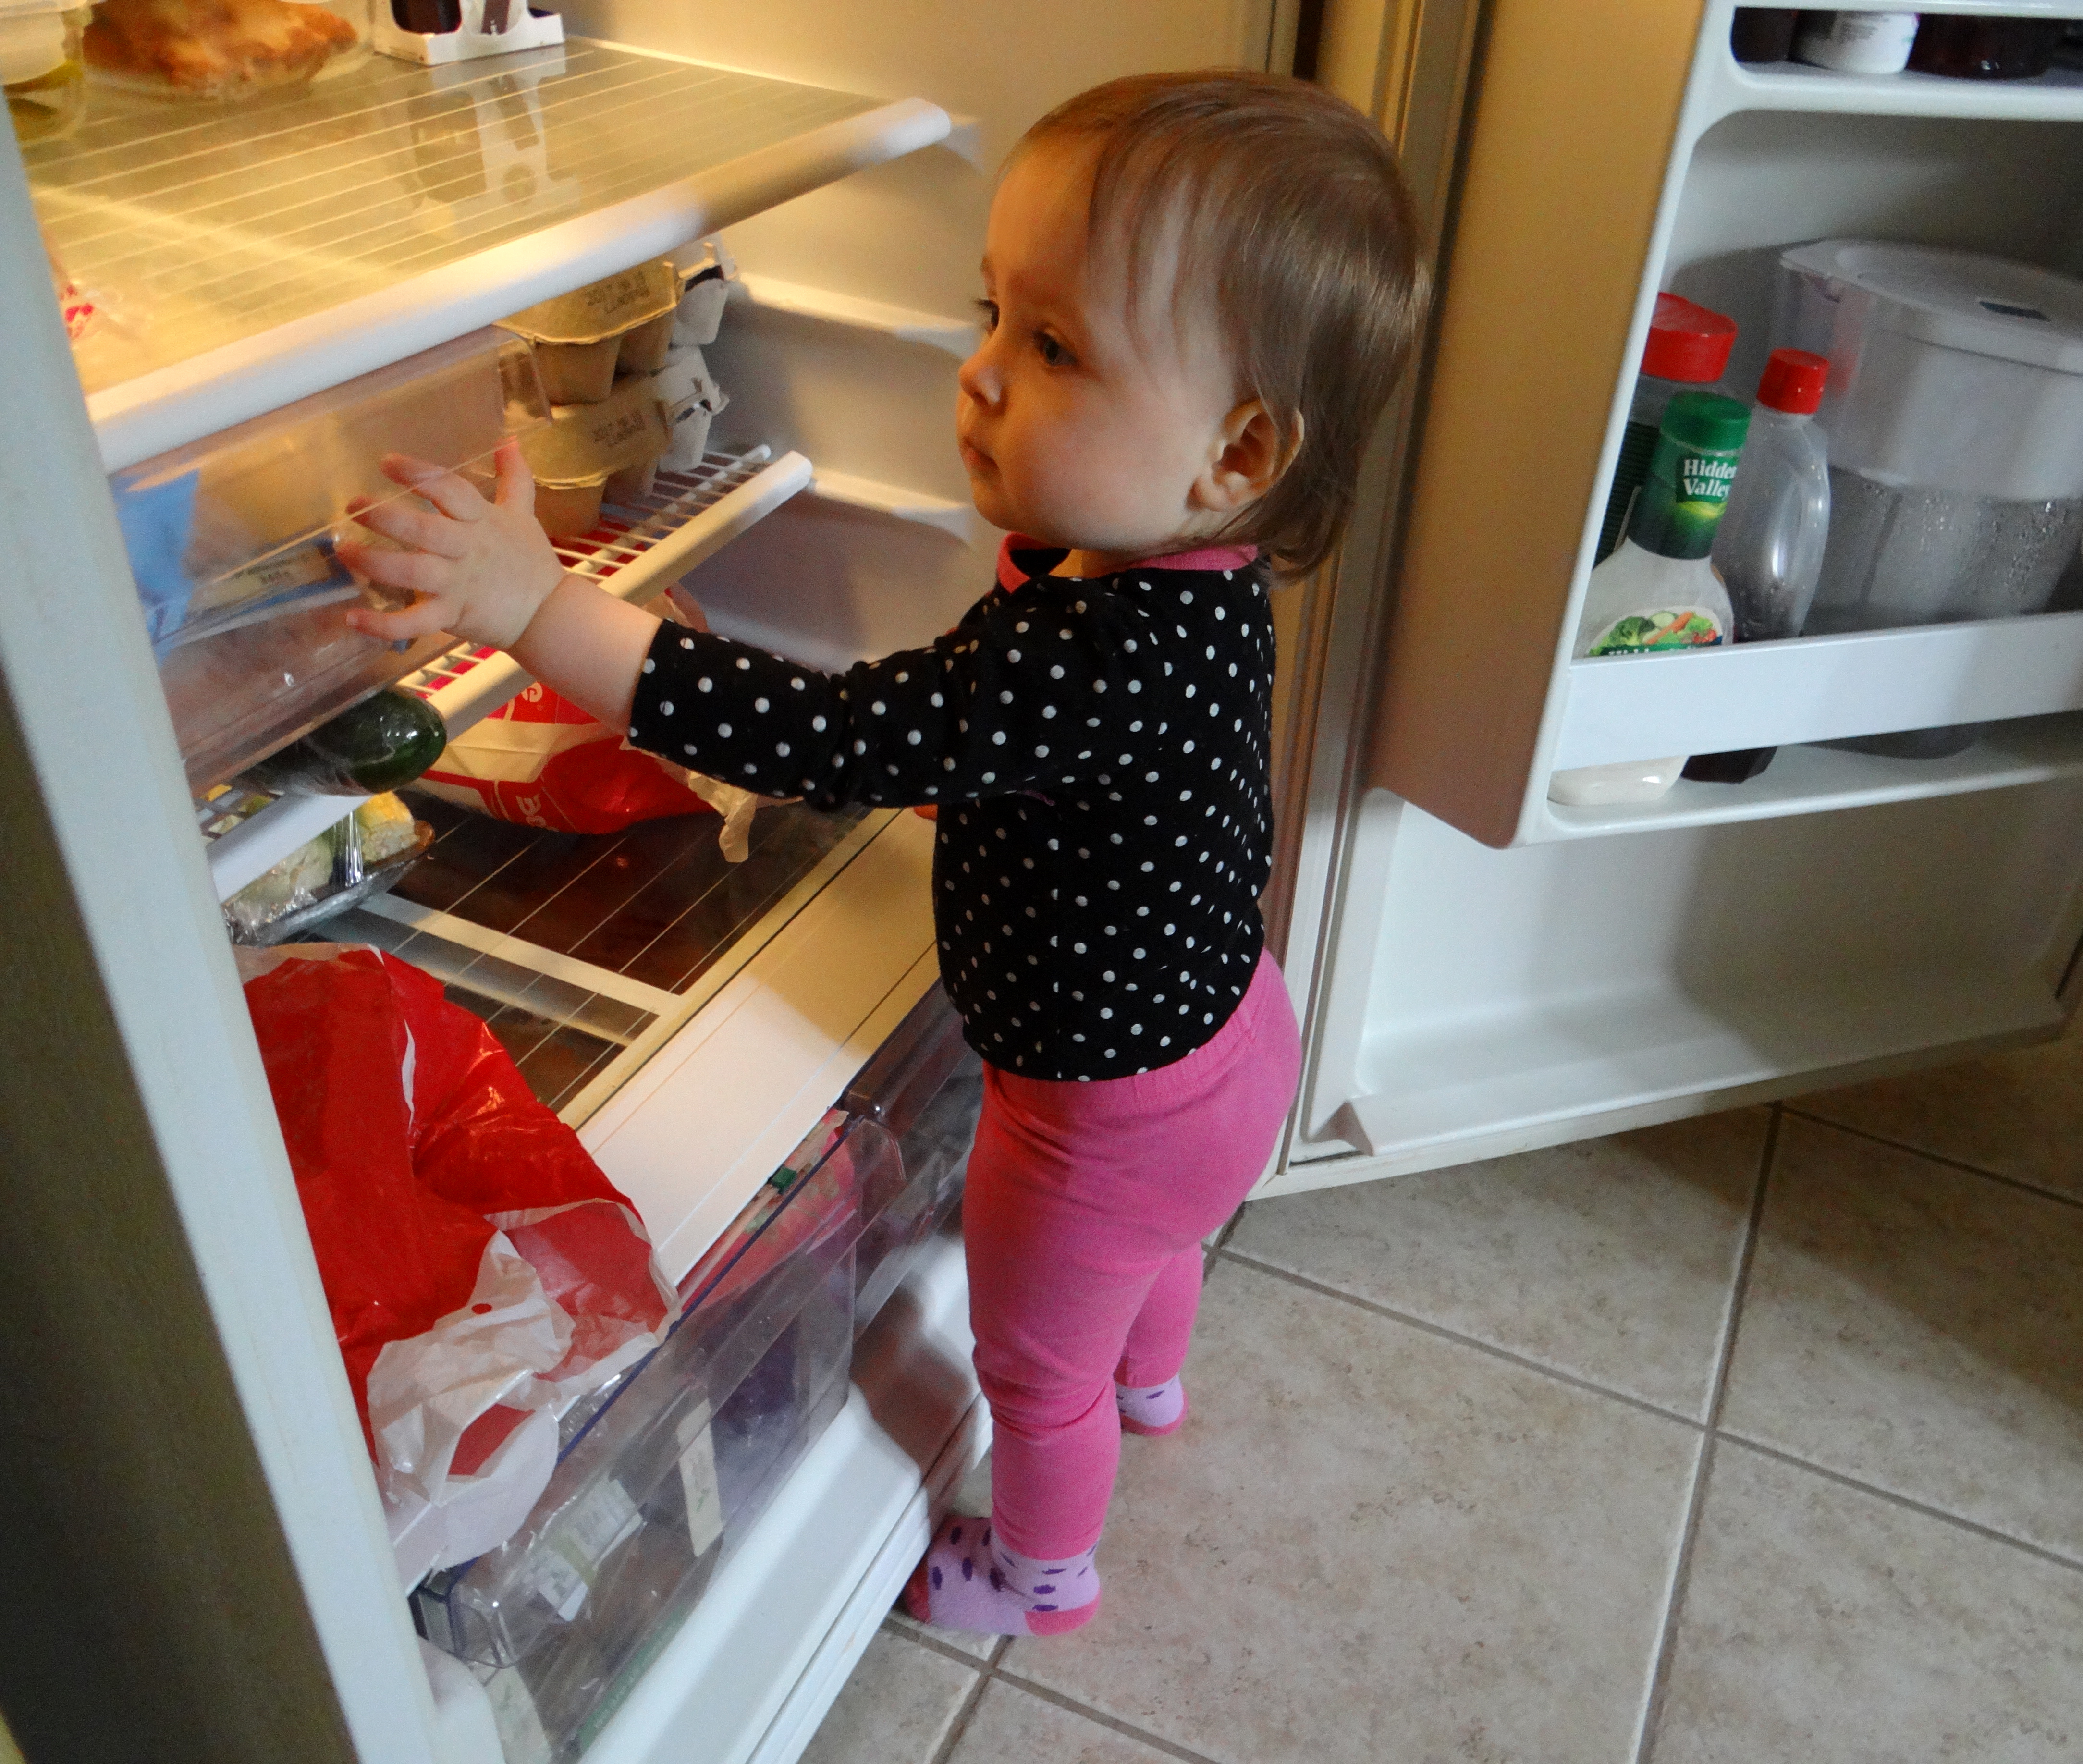 Toddler exploring the inside of a fridge